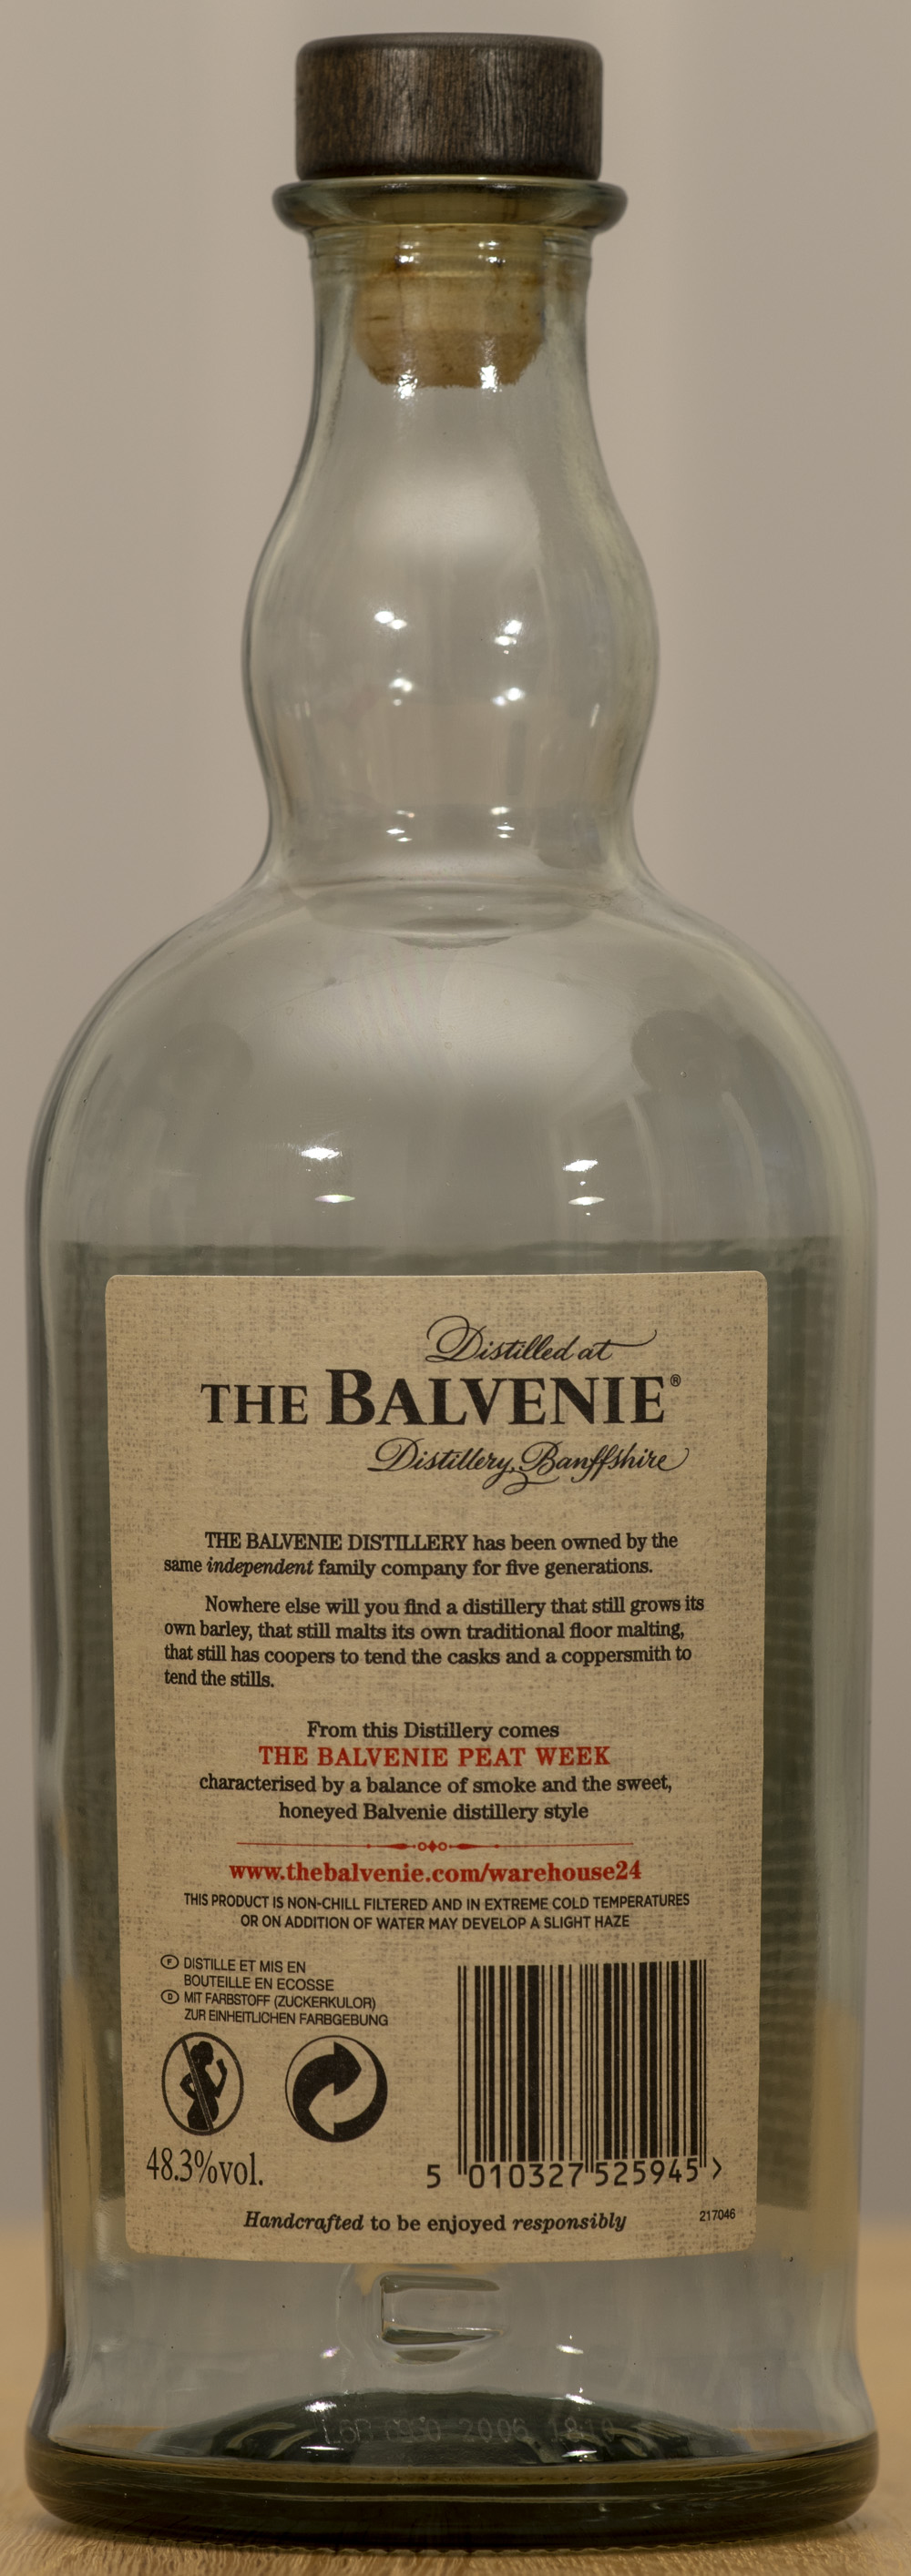 Billede: PHC_1556 - Balvenie Peat Week - bottle back.jpg